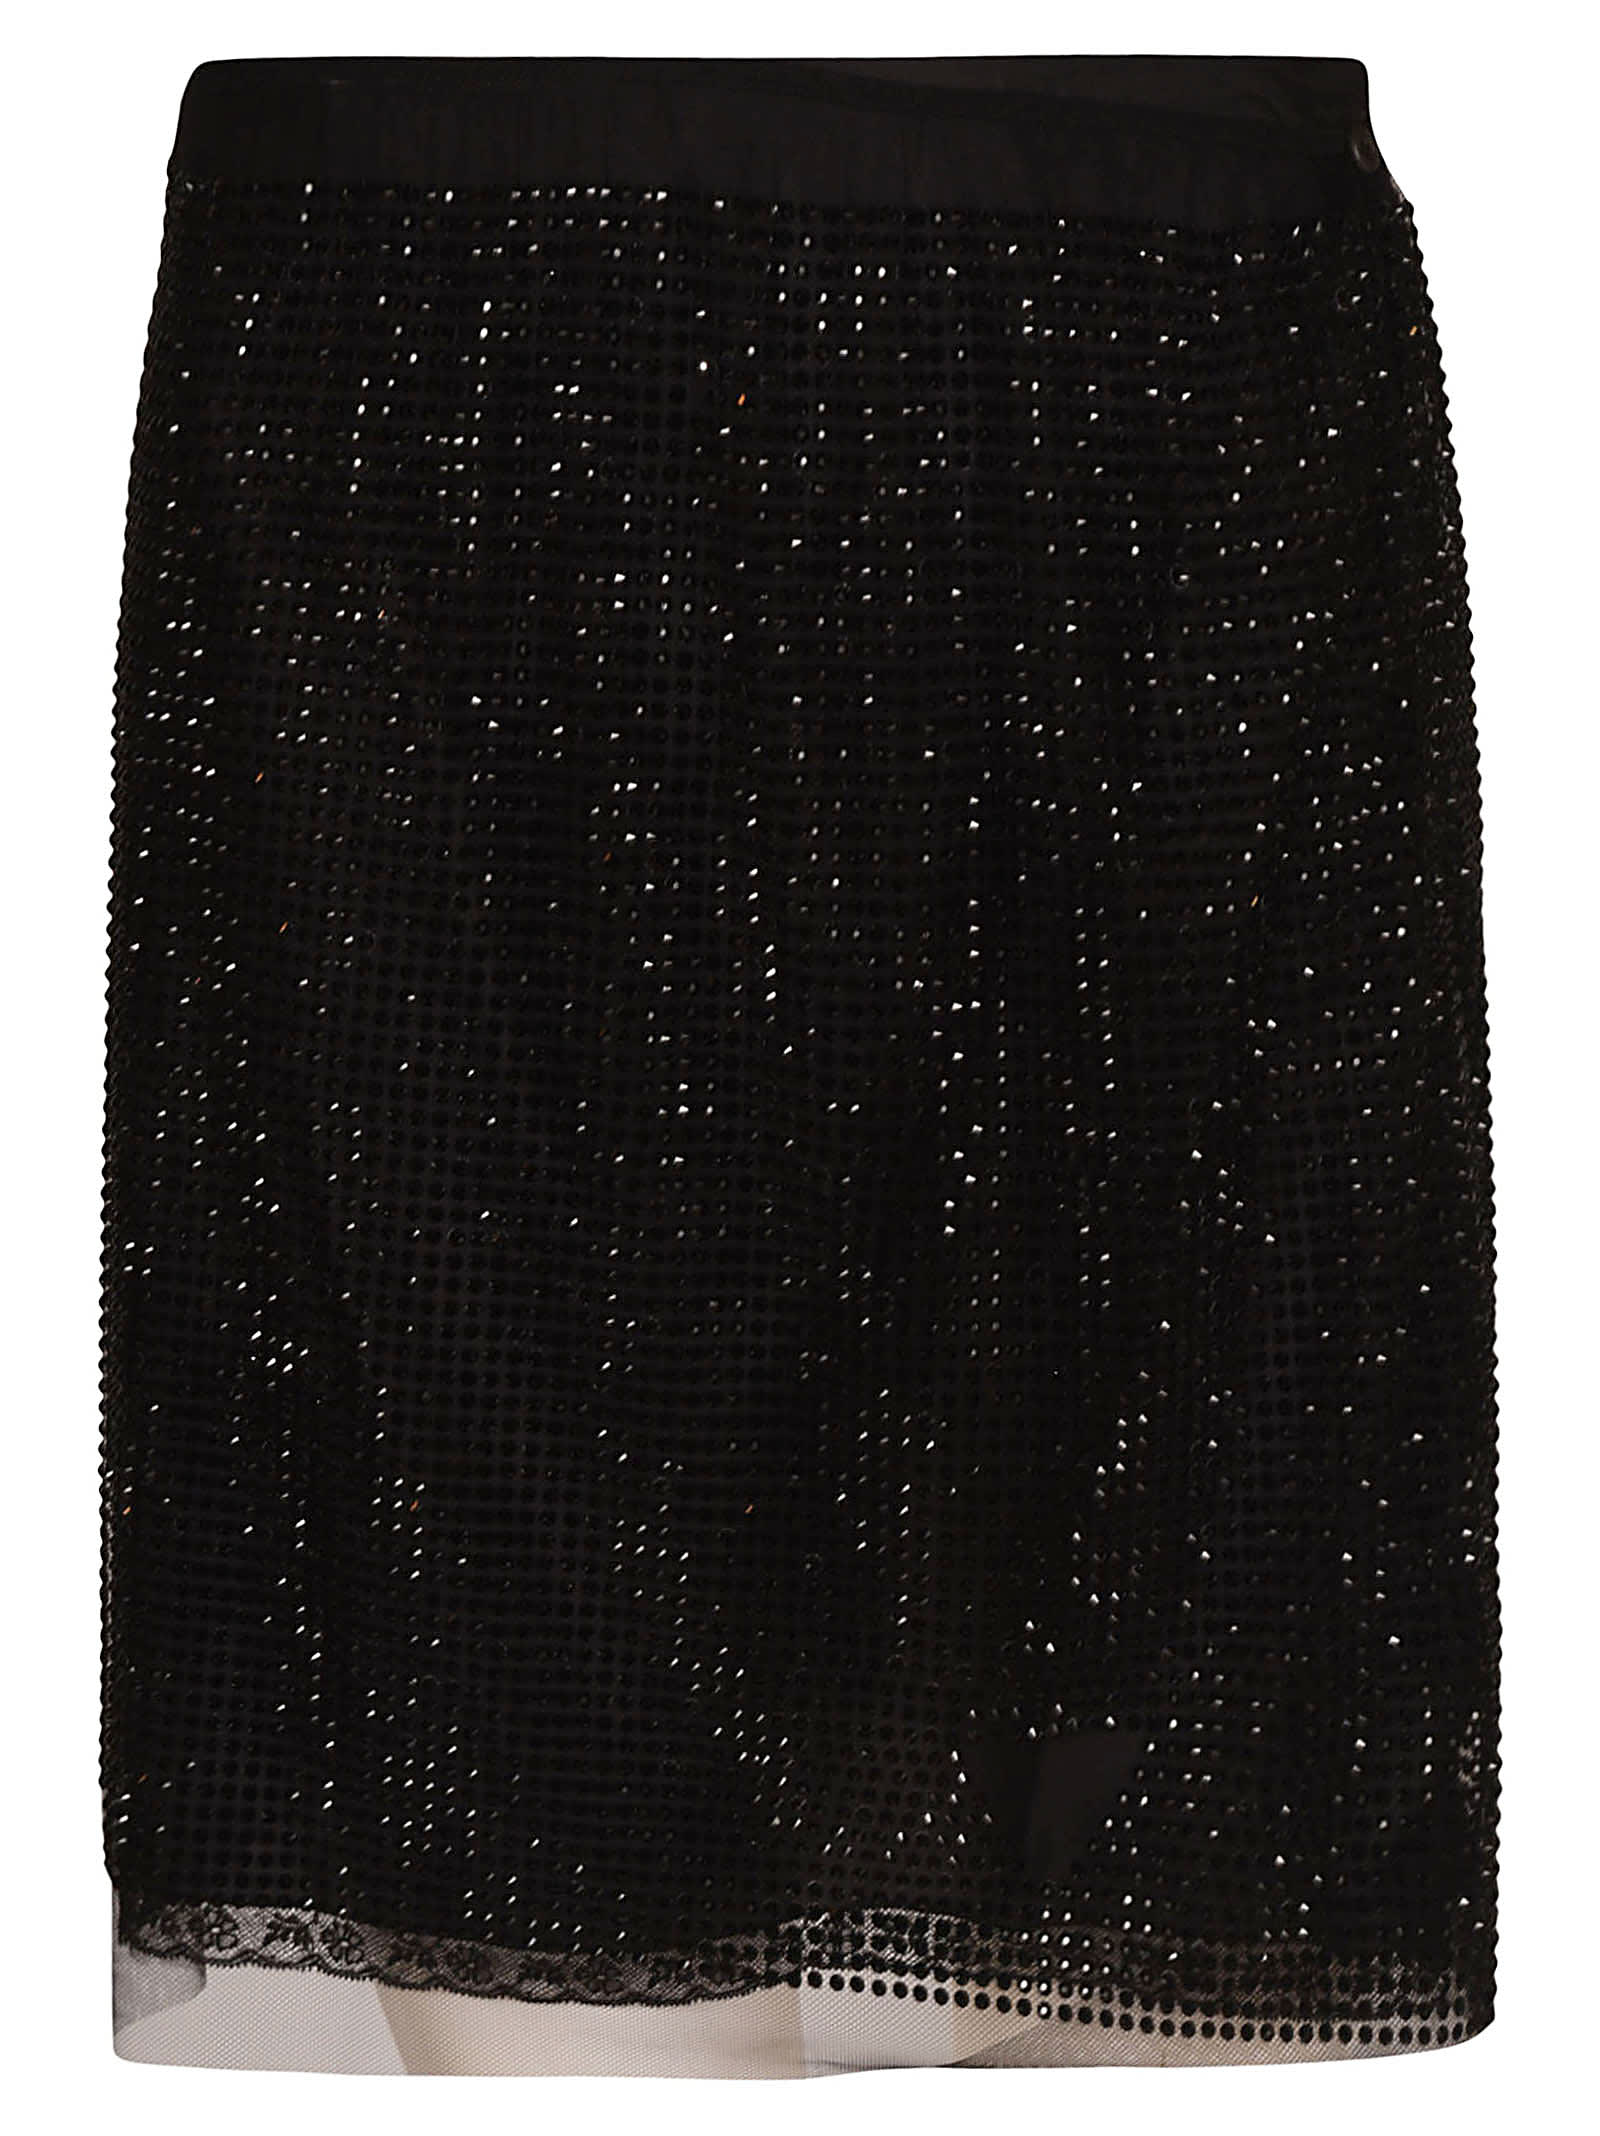 Prada Embellished Tulle Skirt